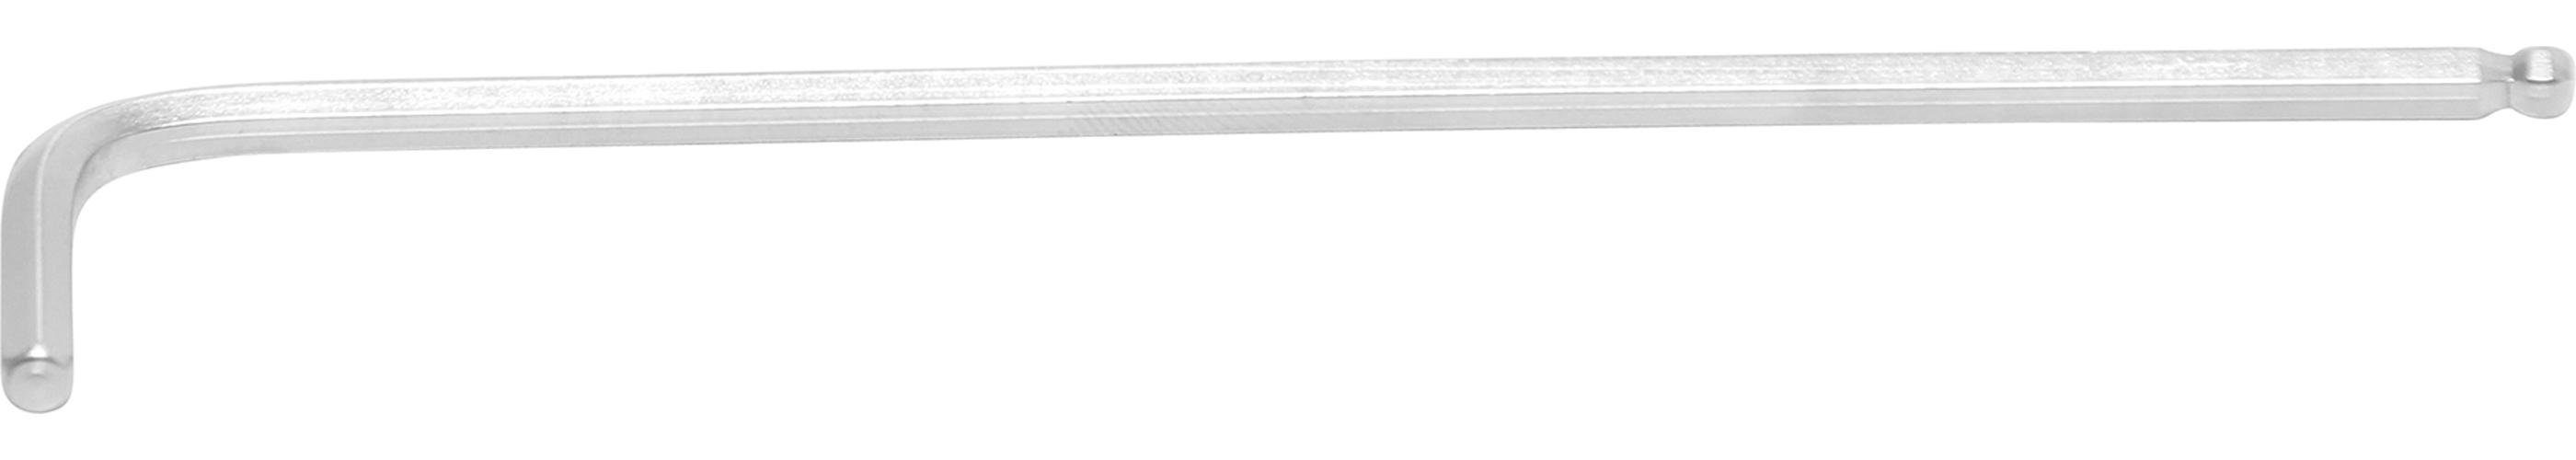 BGS technic Bit-Schraubendreher / Winkelschlüssel, Innensechskant Innensechskant Kugelkopf lang, 4 extra mm mit